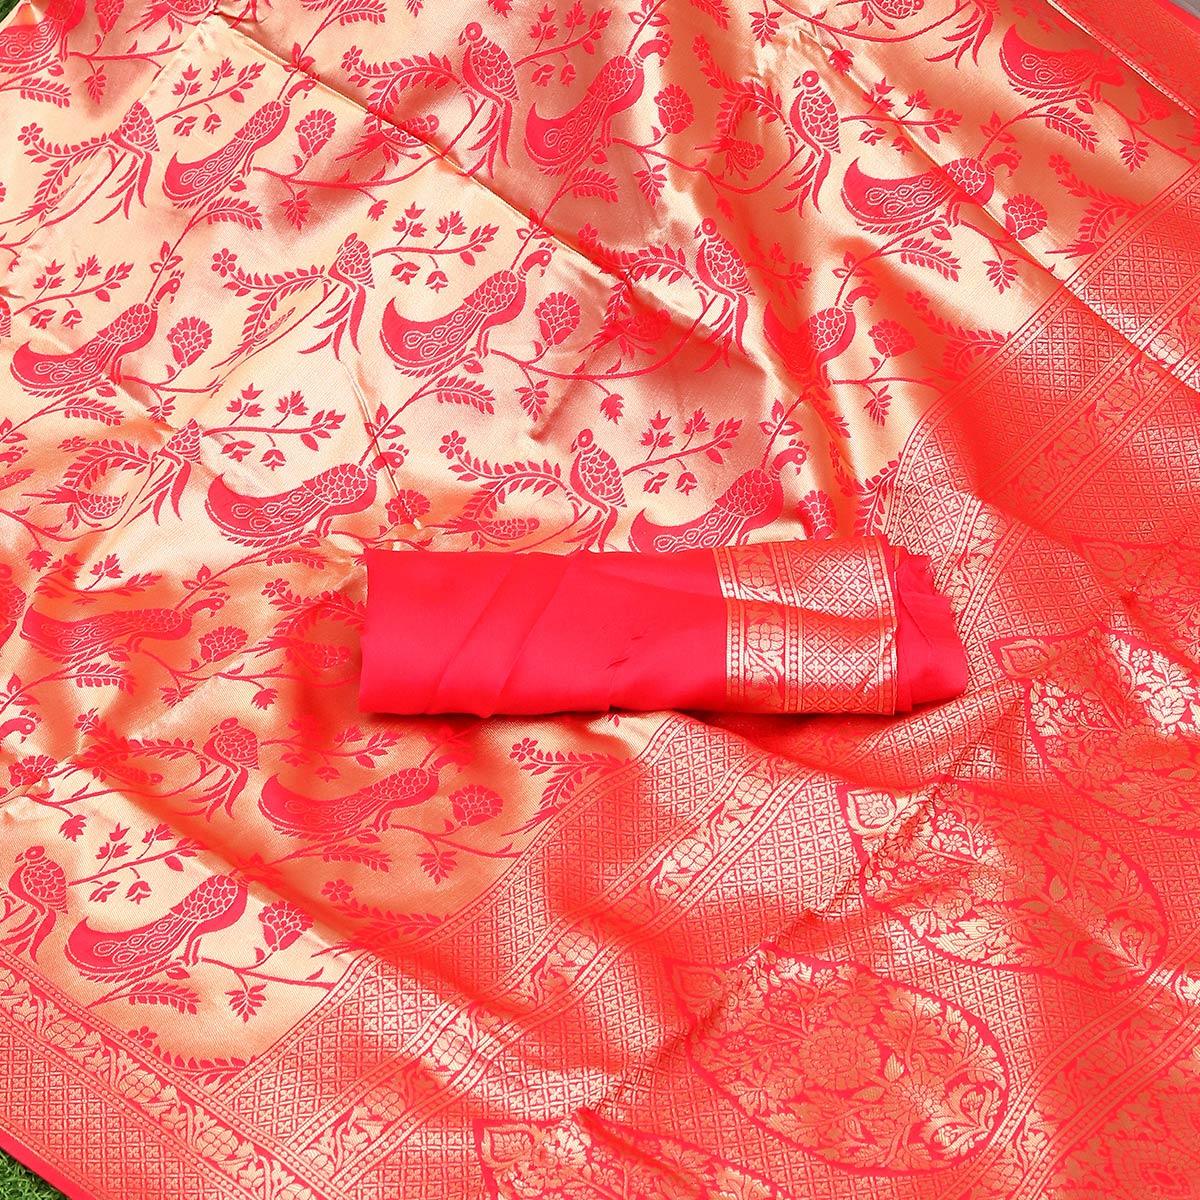 Peach Festive Wear Woven Kota Litchi Banarasi Art Silk Saree - Peachmode